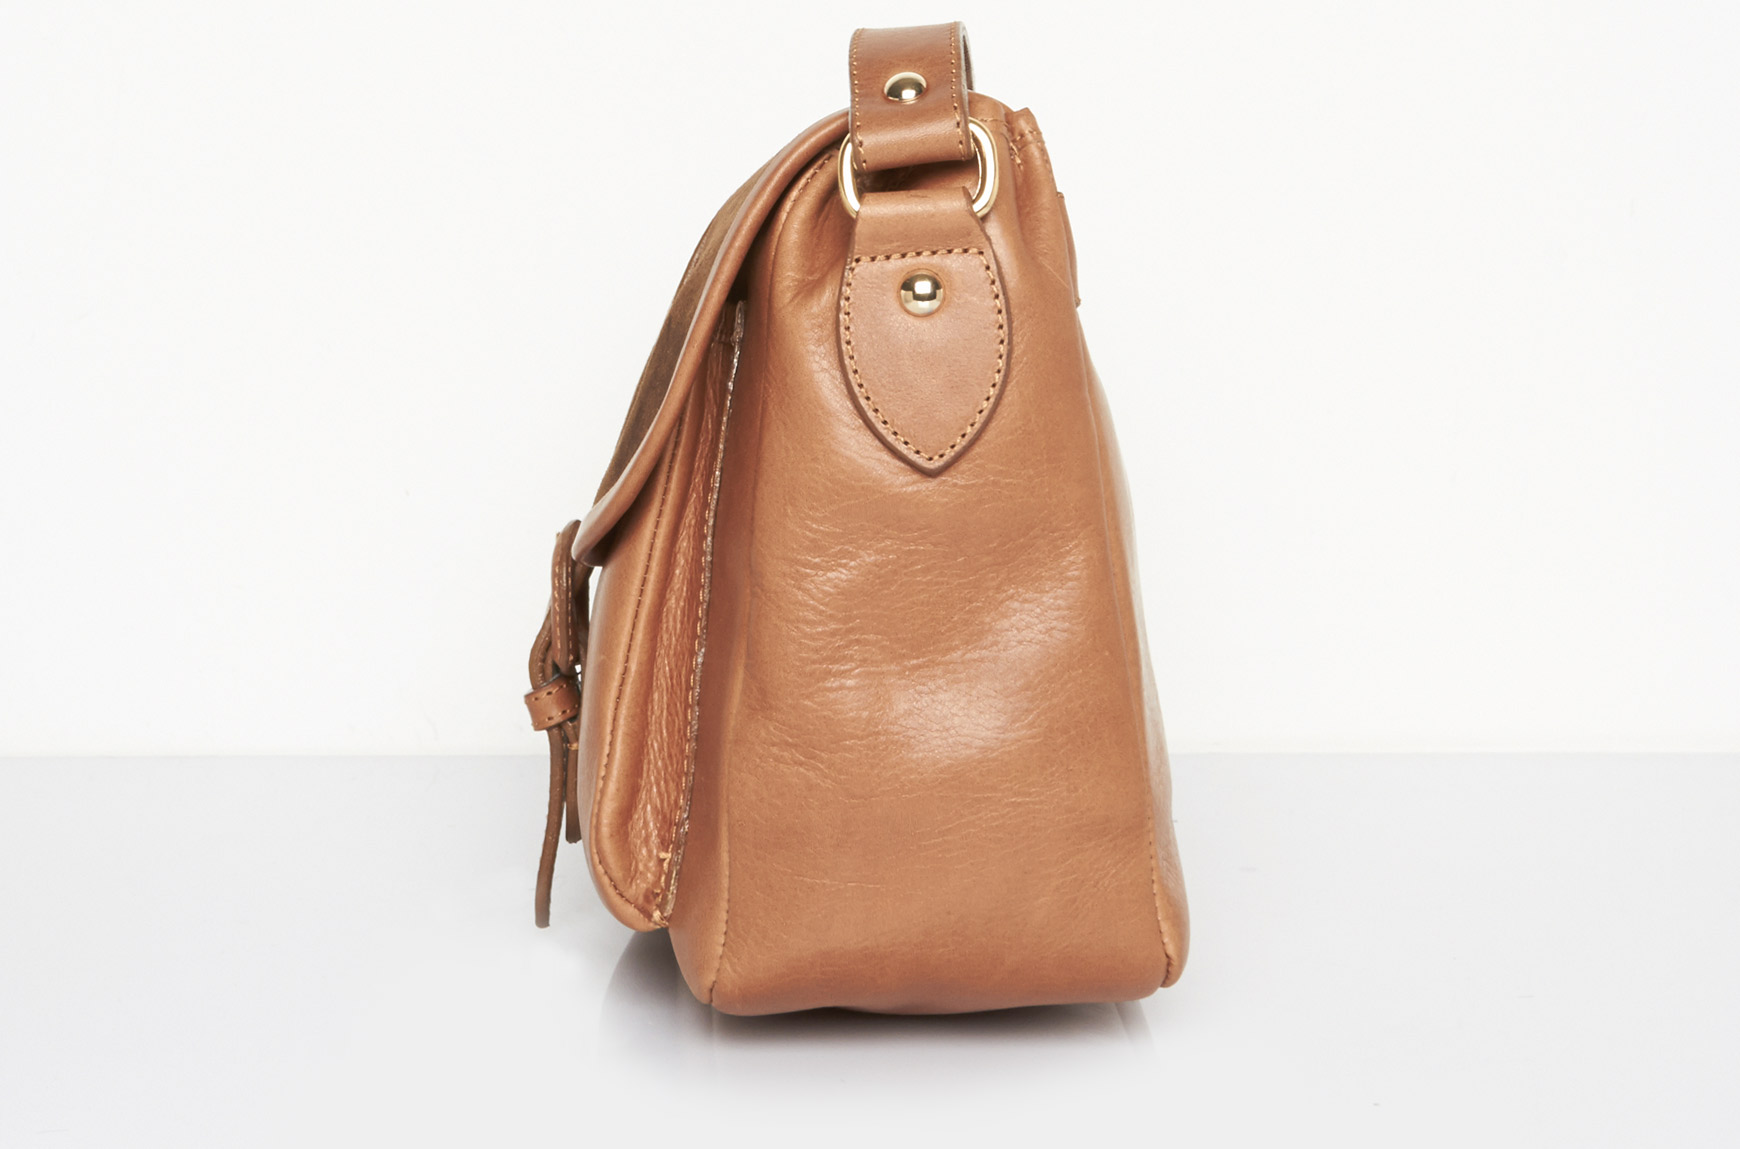 Lyst - A.p.c. Classic Bag in Brown